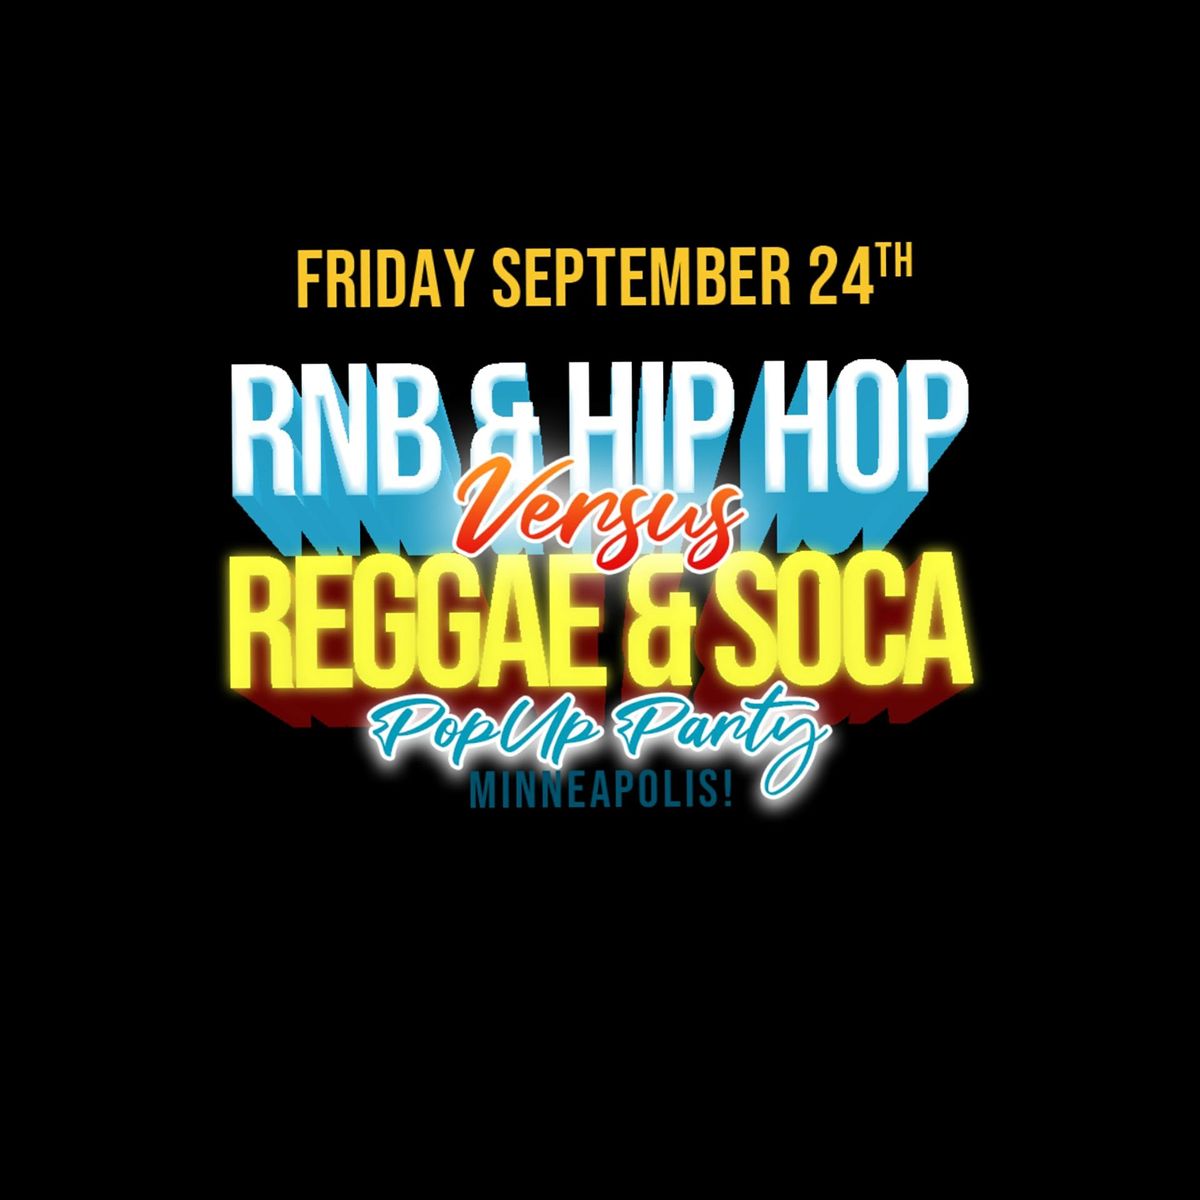 RNB&HIPHOP VS REGGAE&SOCA POP UP PARTY  Minneapolis